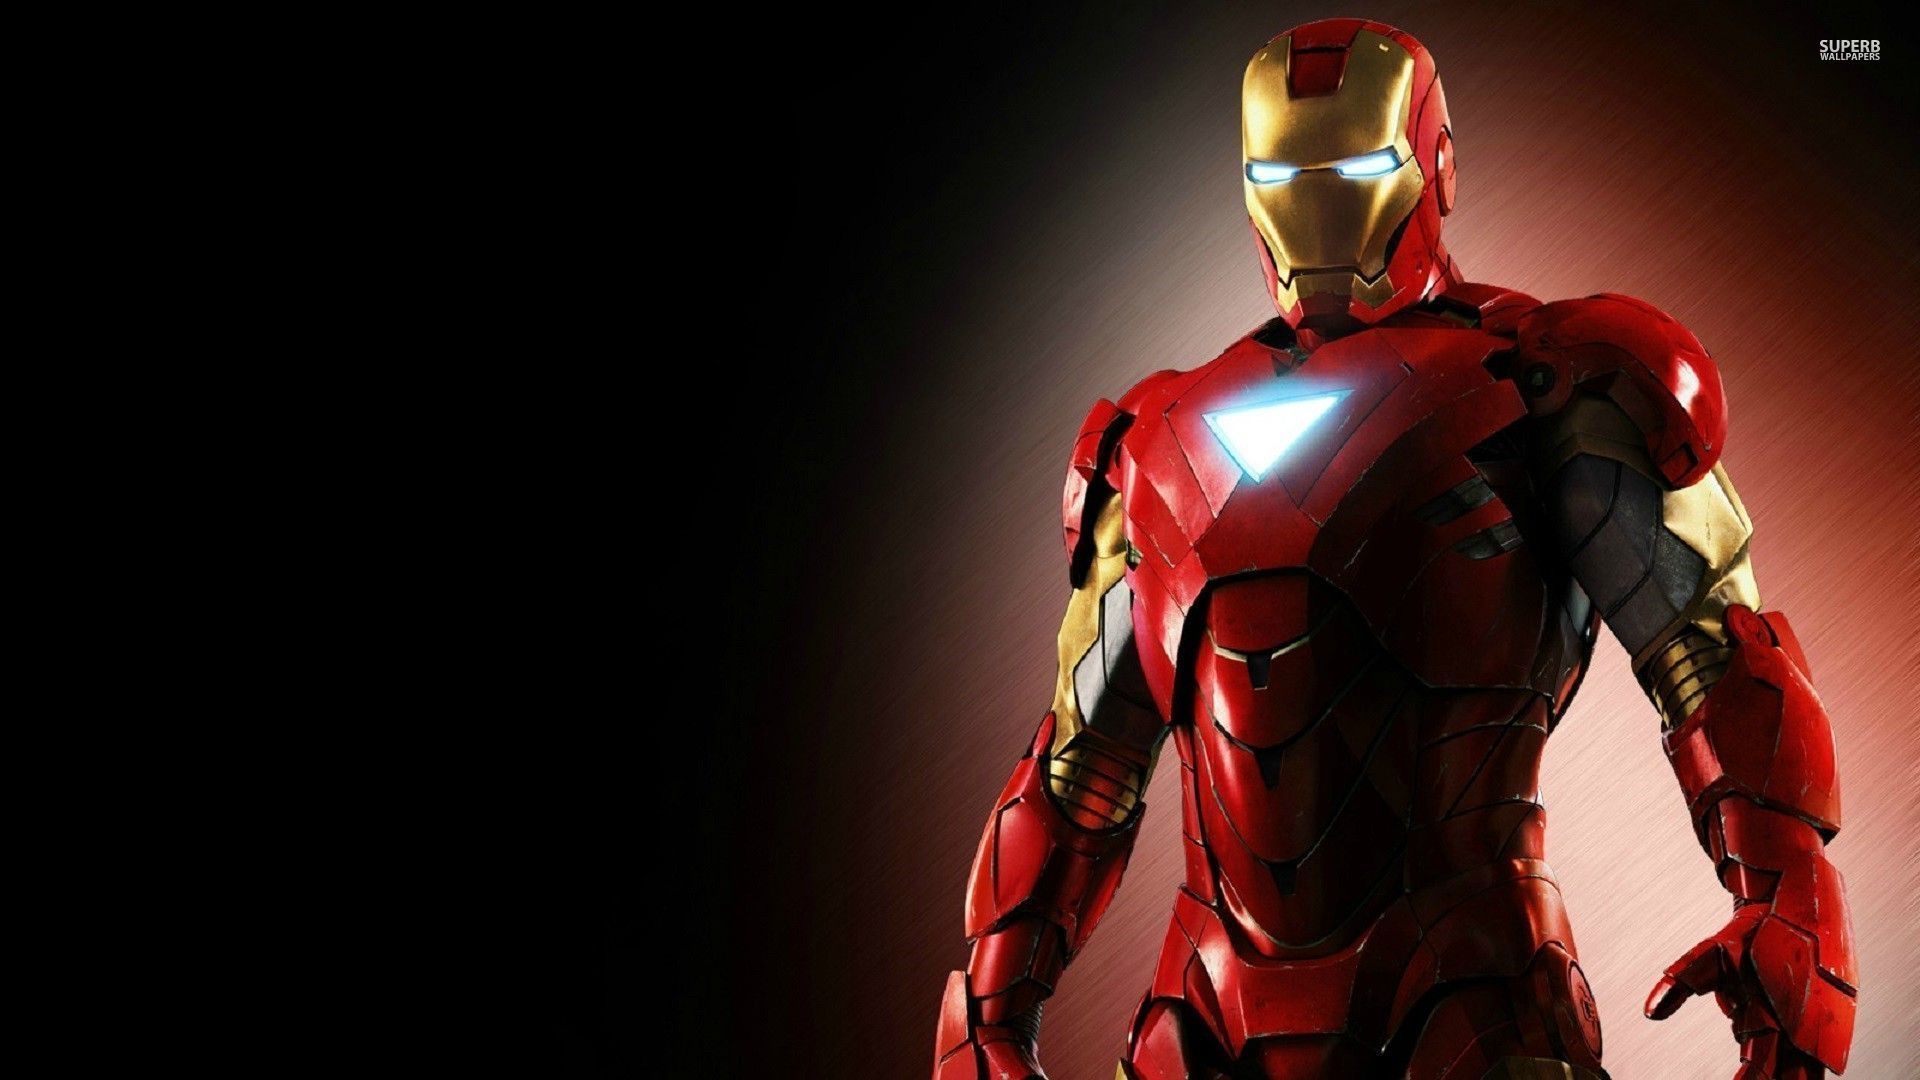 Iron man and War machine Marvel comics 4K wallpaper download